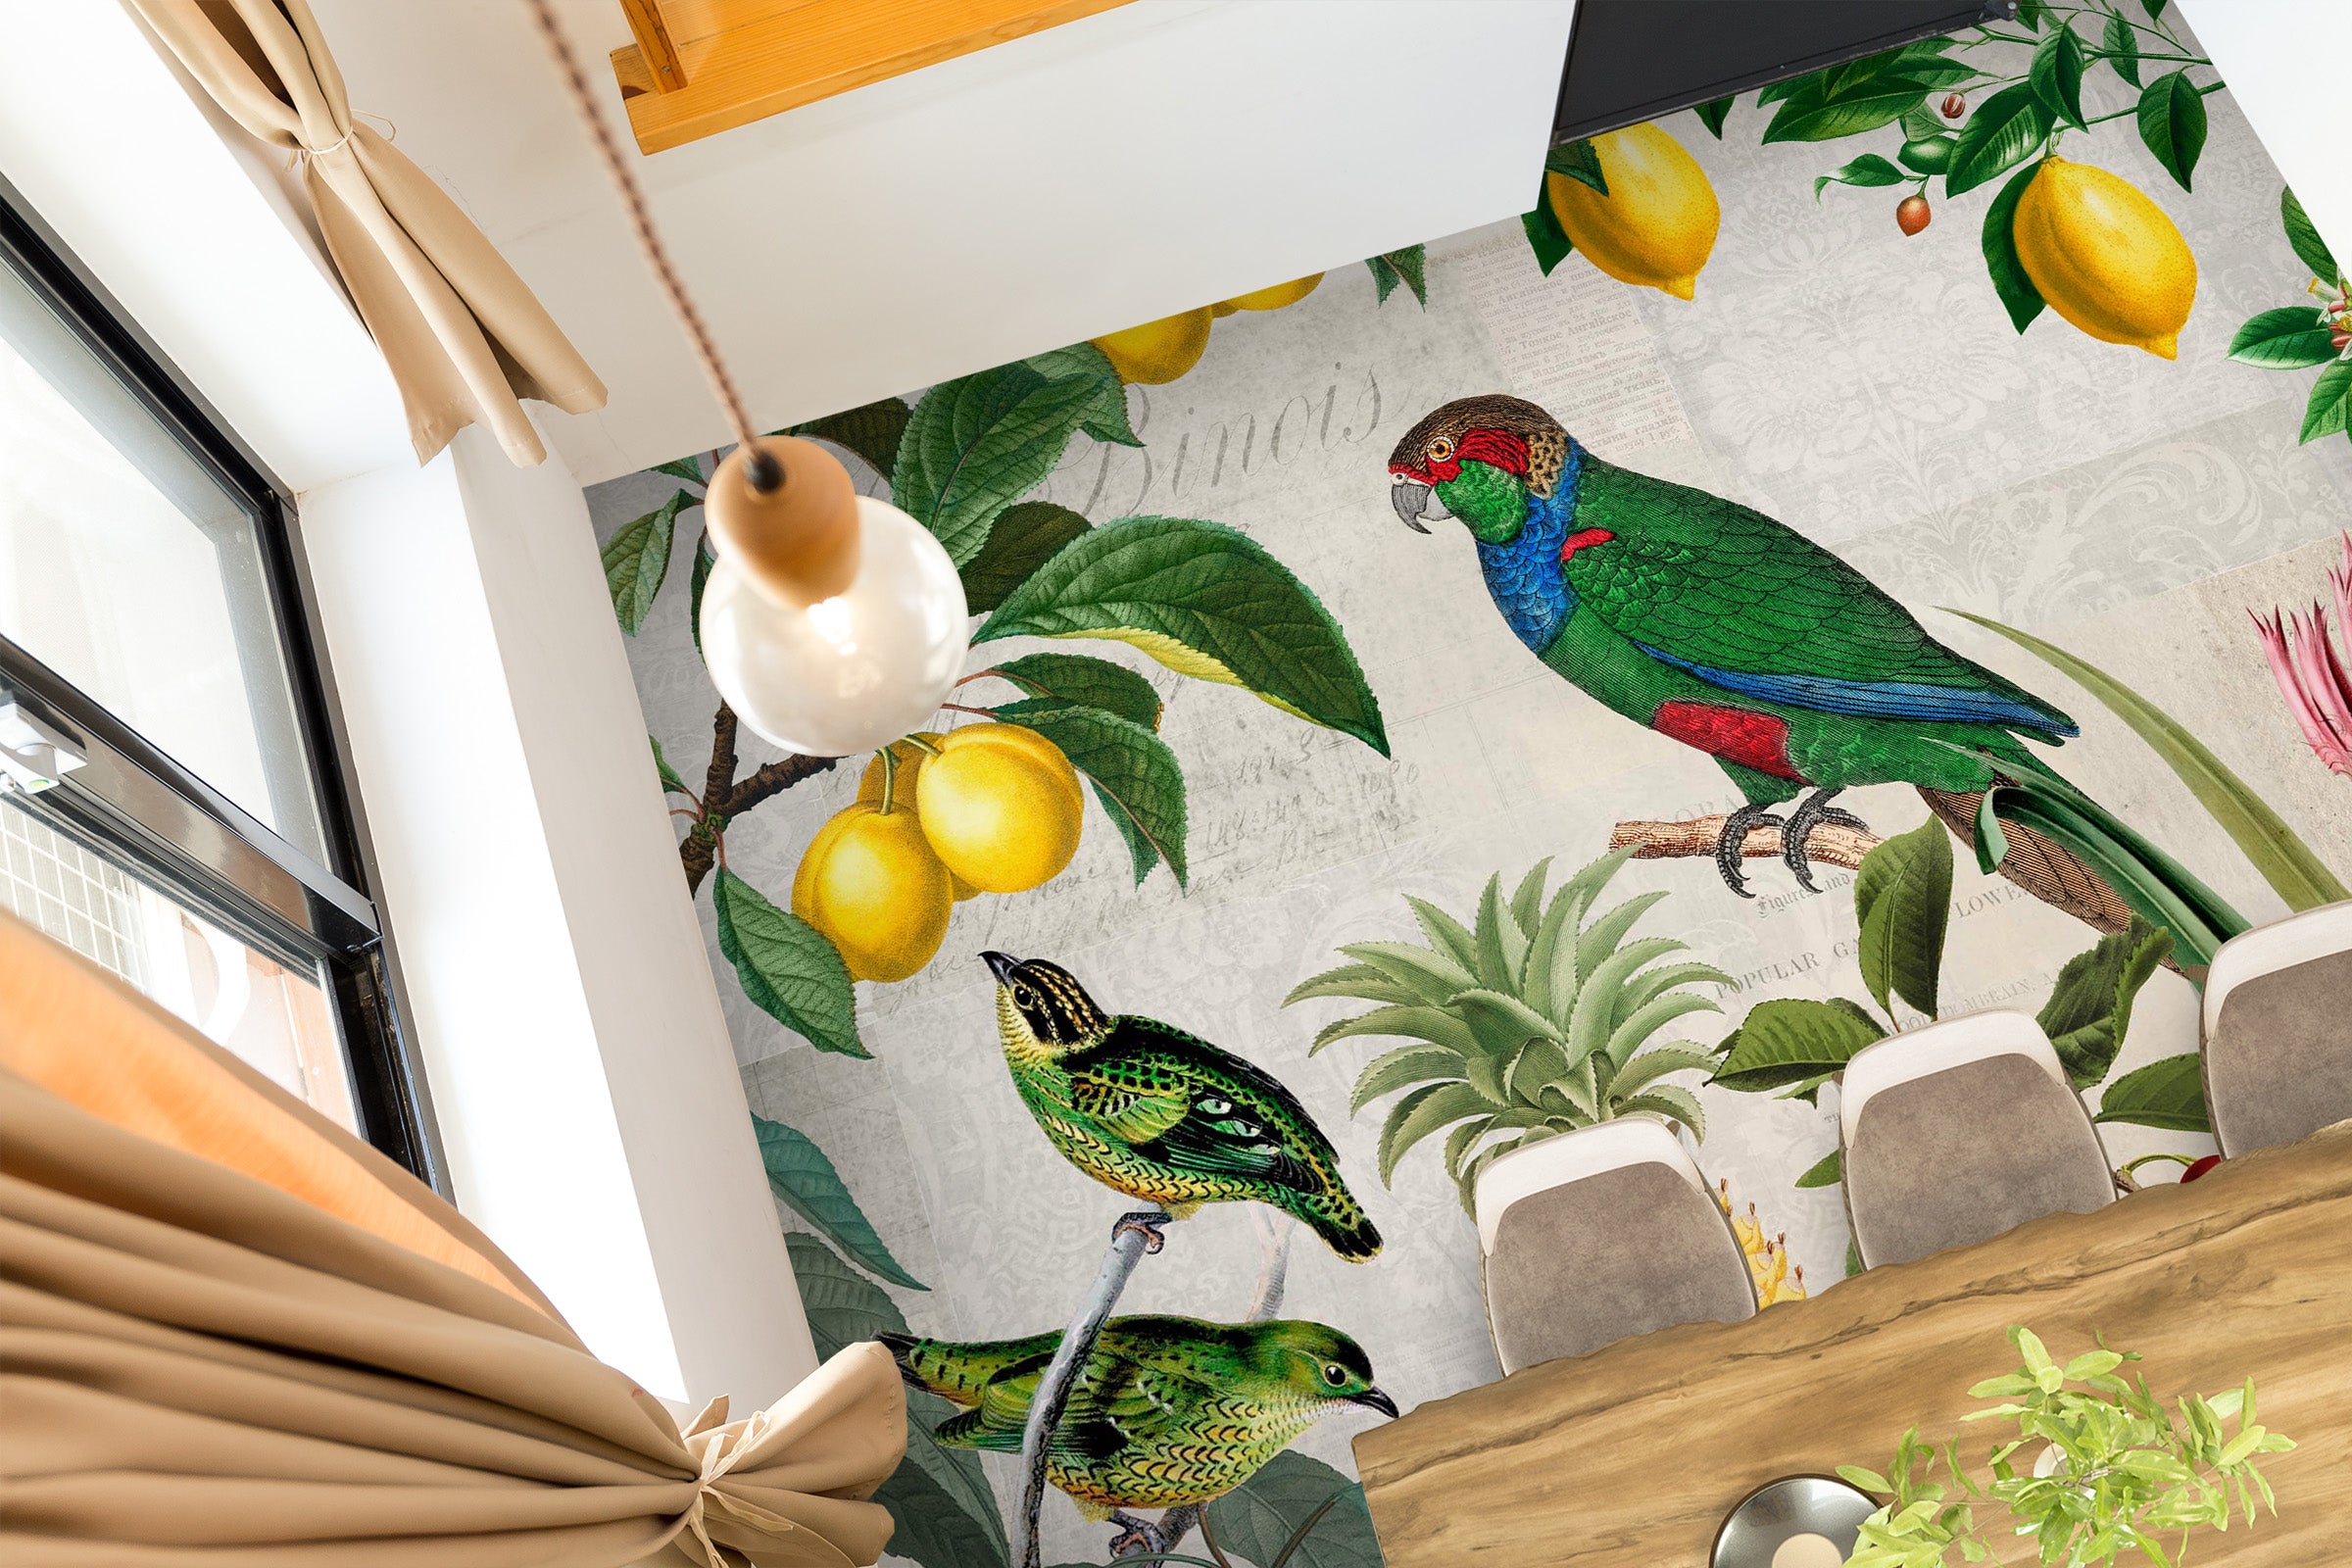 3D Lemon Tree Parrot 104147 Andrea Haase Floor Mural  Wallpaper Murals Self-Adhesive Removable Print Epoxy